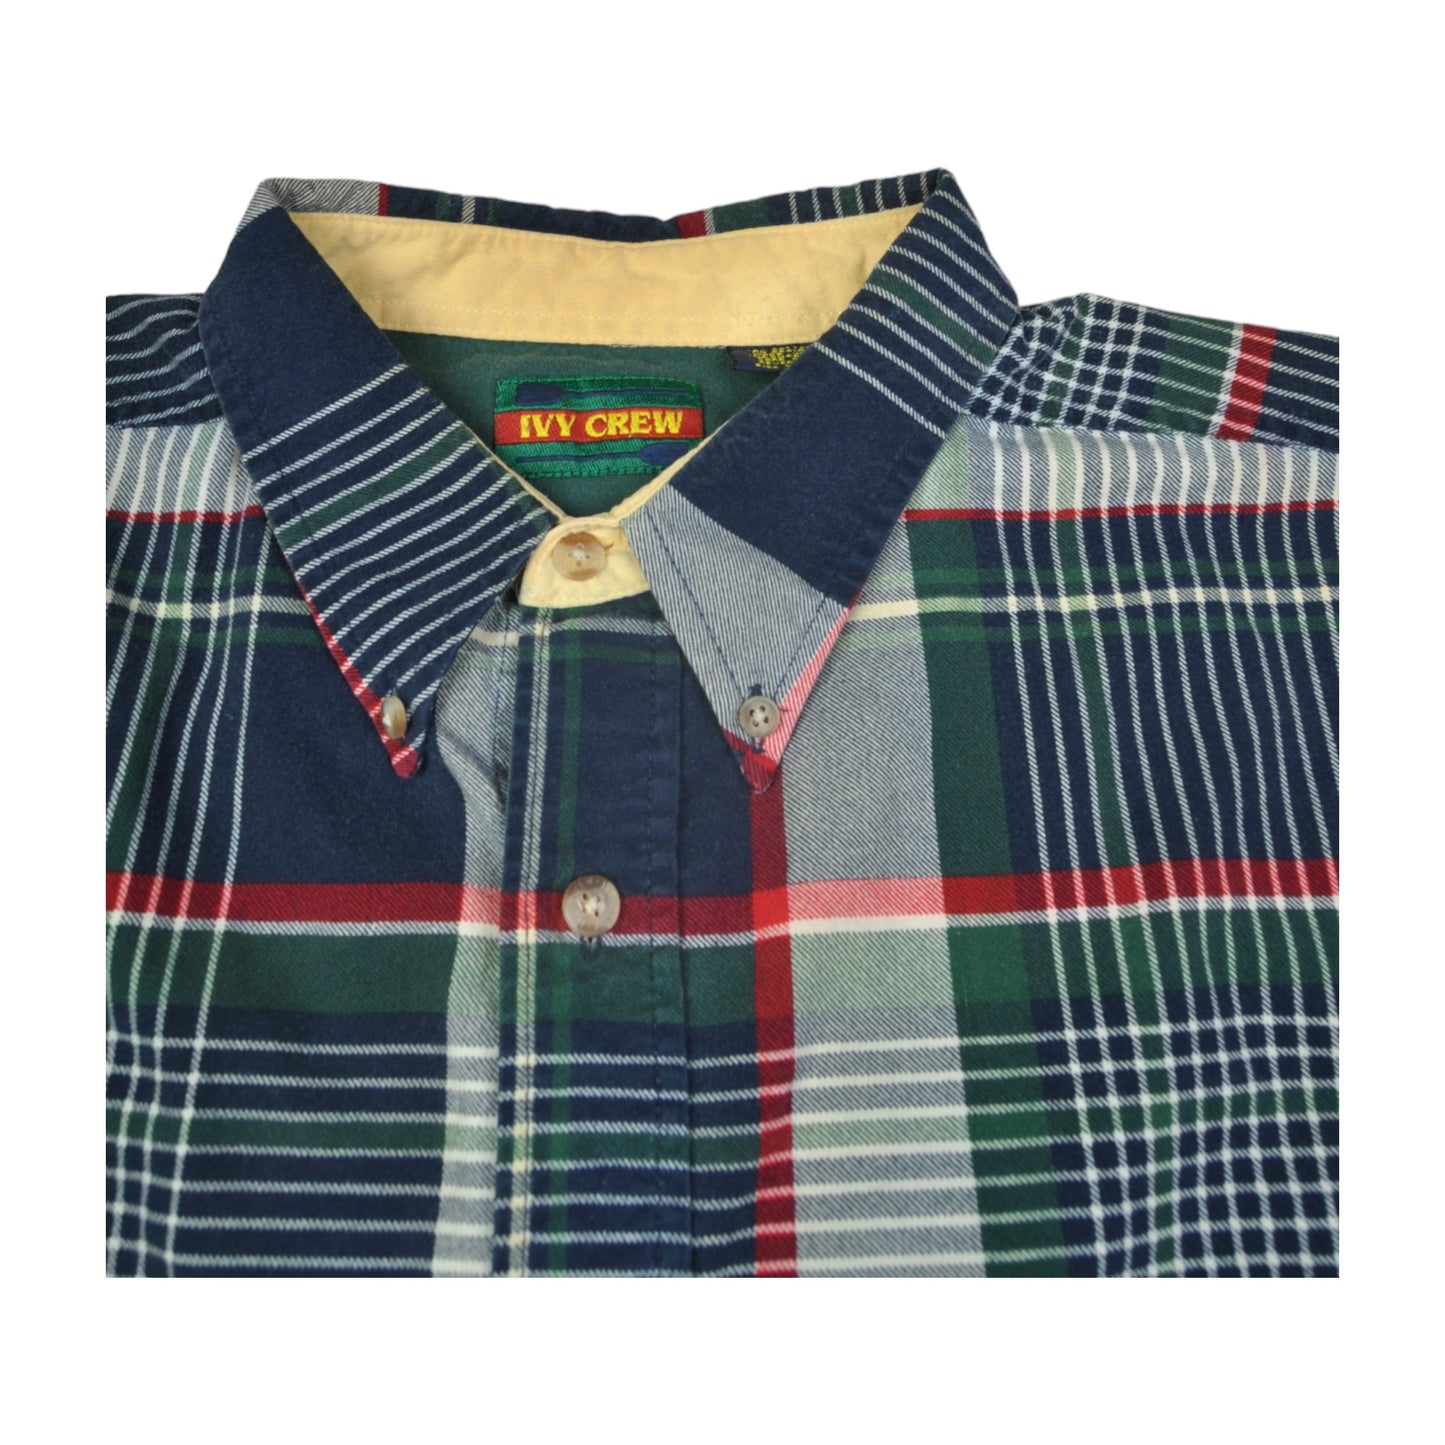 Vintage Shirt 90s Checked Long Sleeve Navy/Green XL